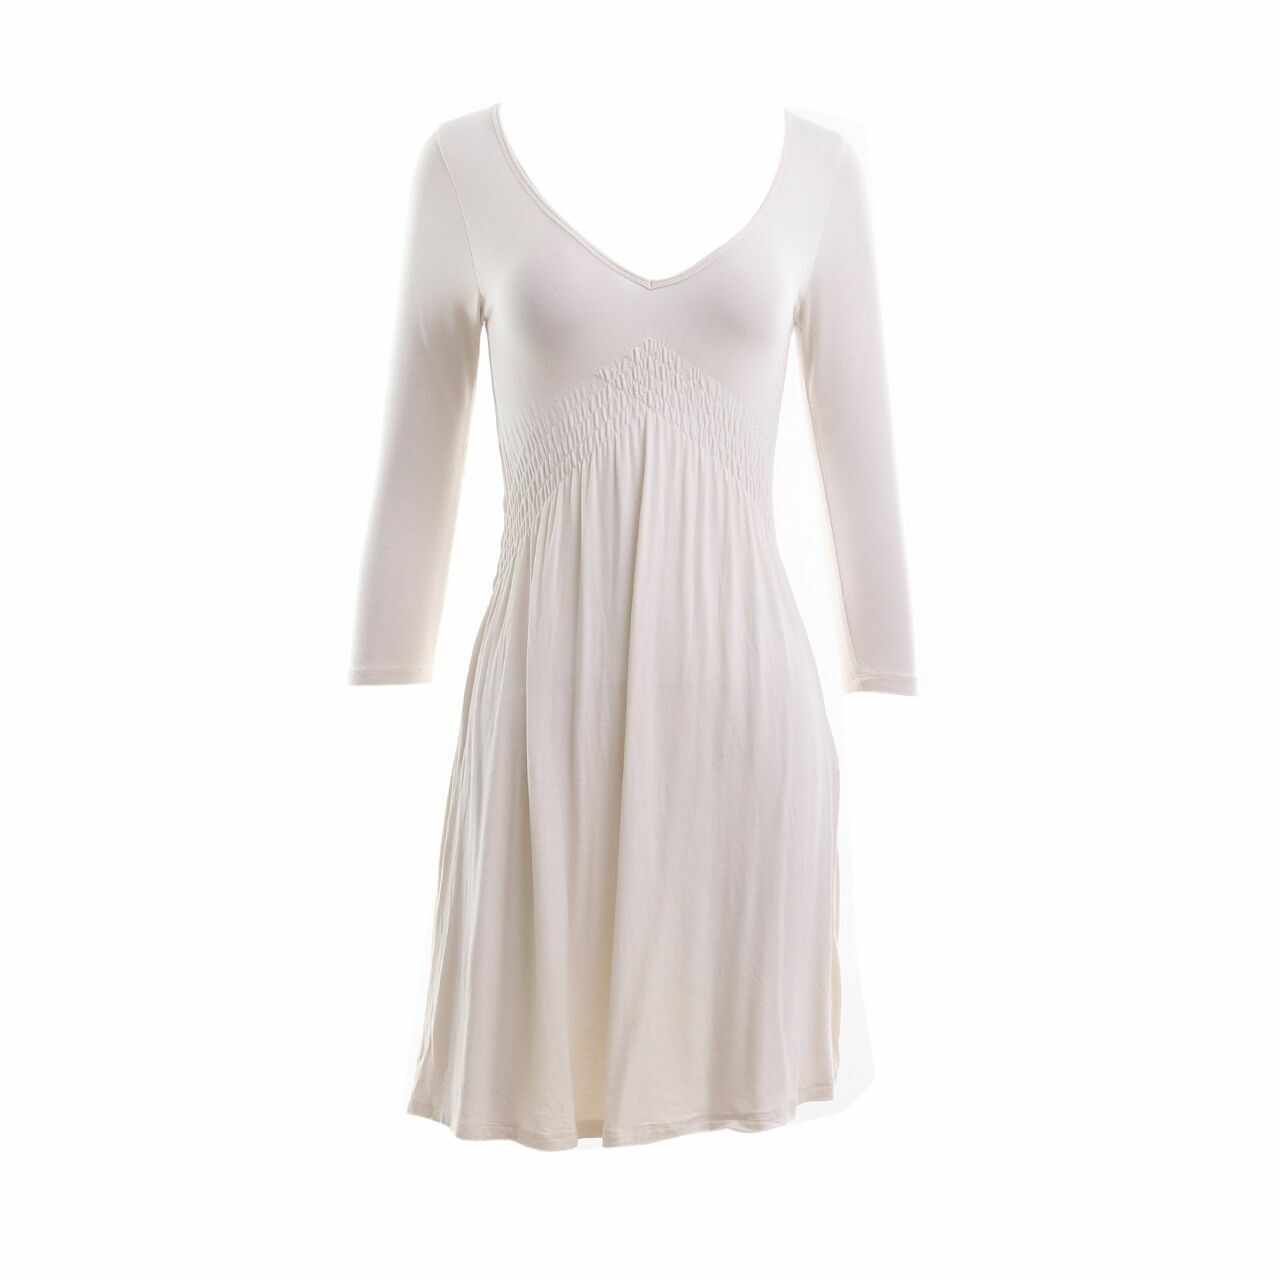 Zara Off White Long Sleeve Mini Dress